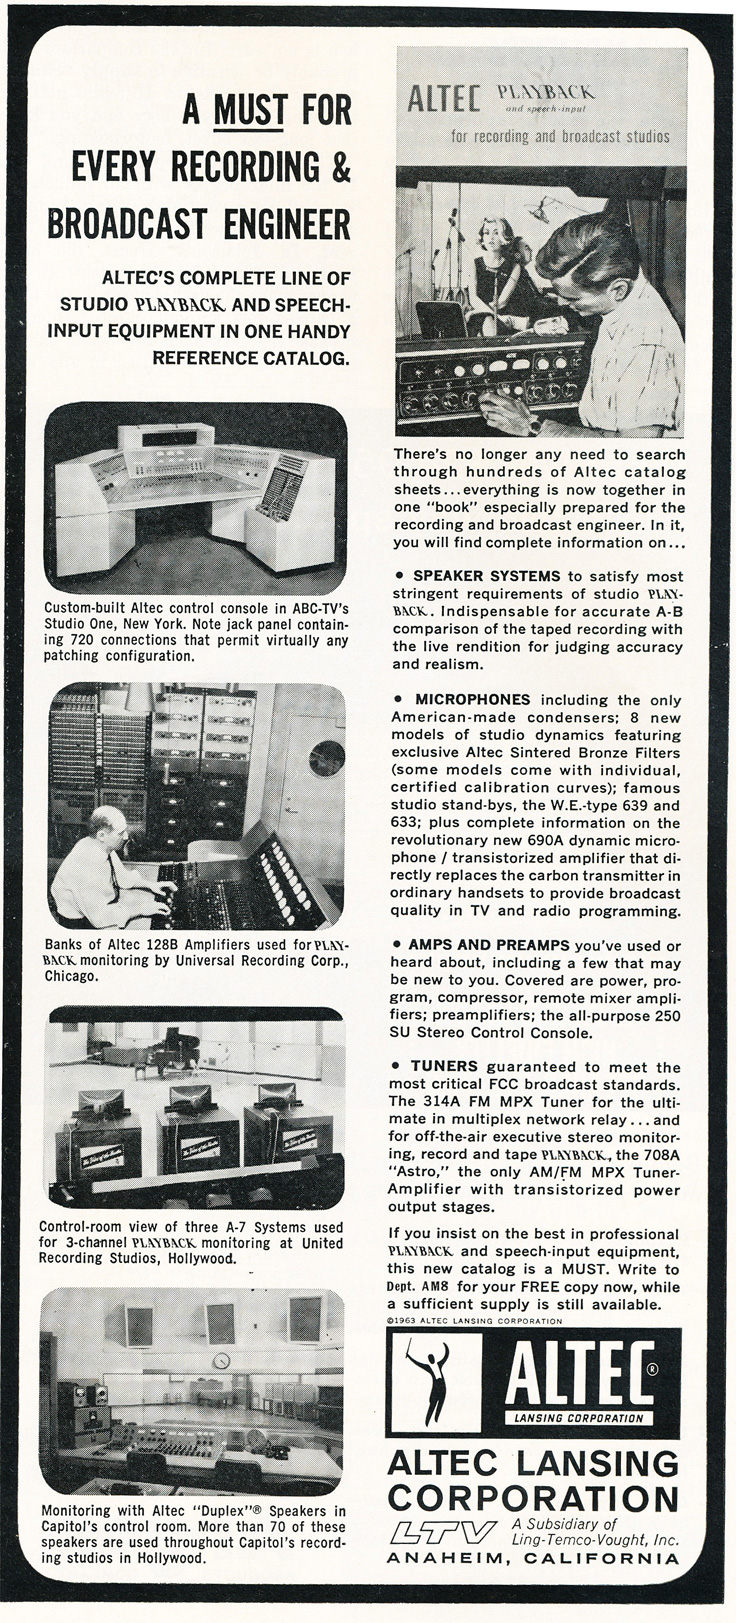 1963 ad for Altec studio equipment in Reel2ReelTexas.com's vintage recording collection